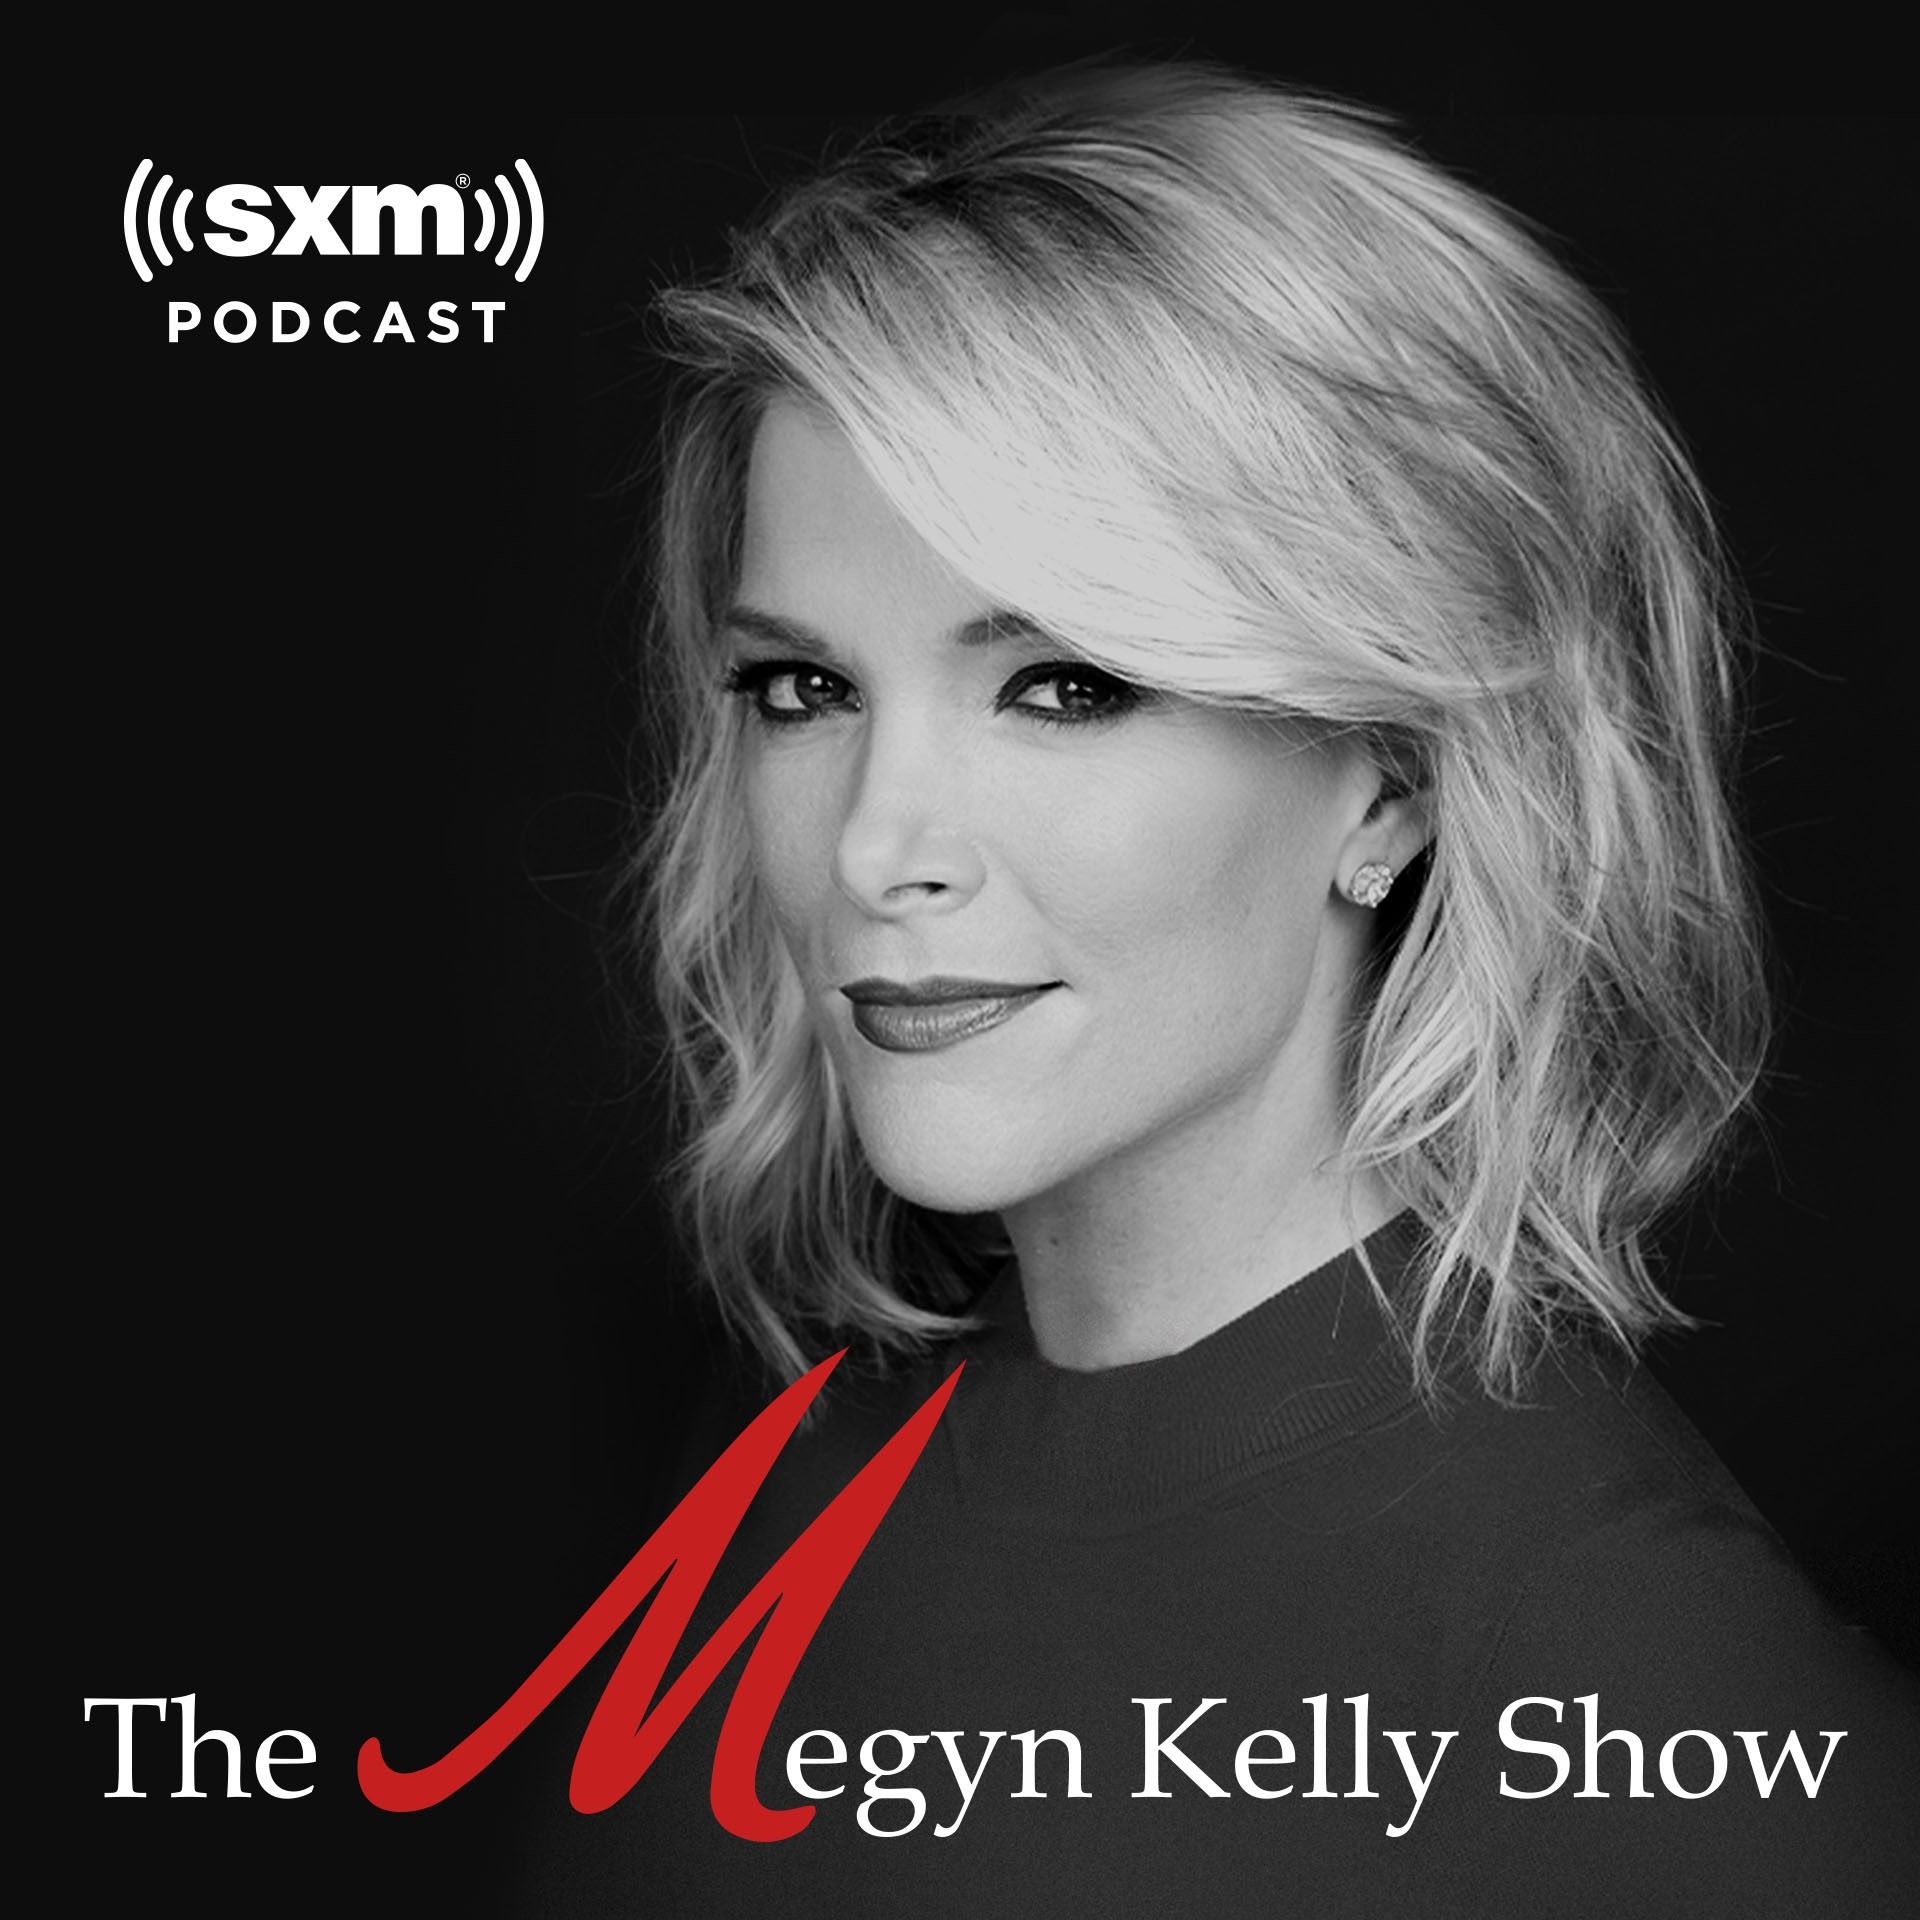 The Megyn Kelly Show